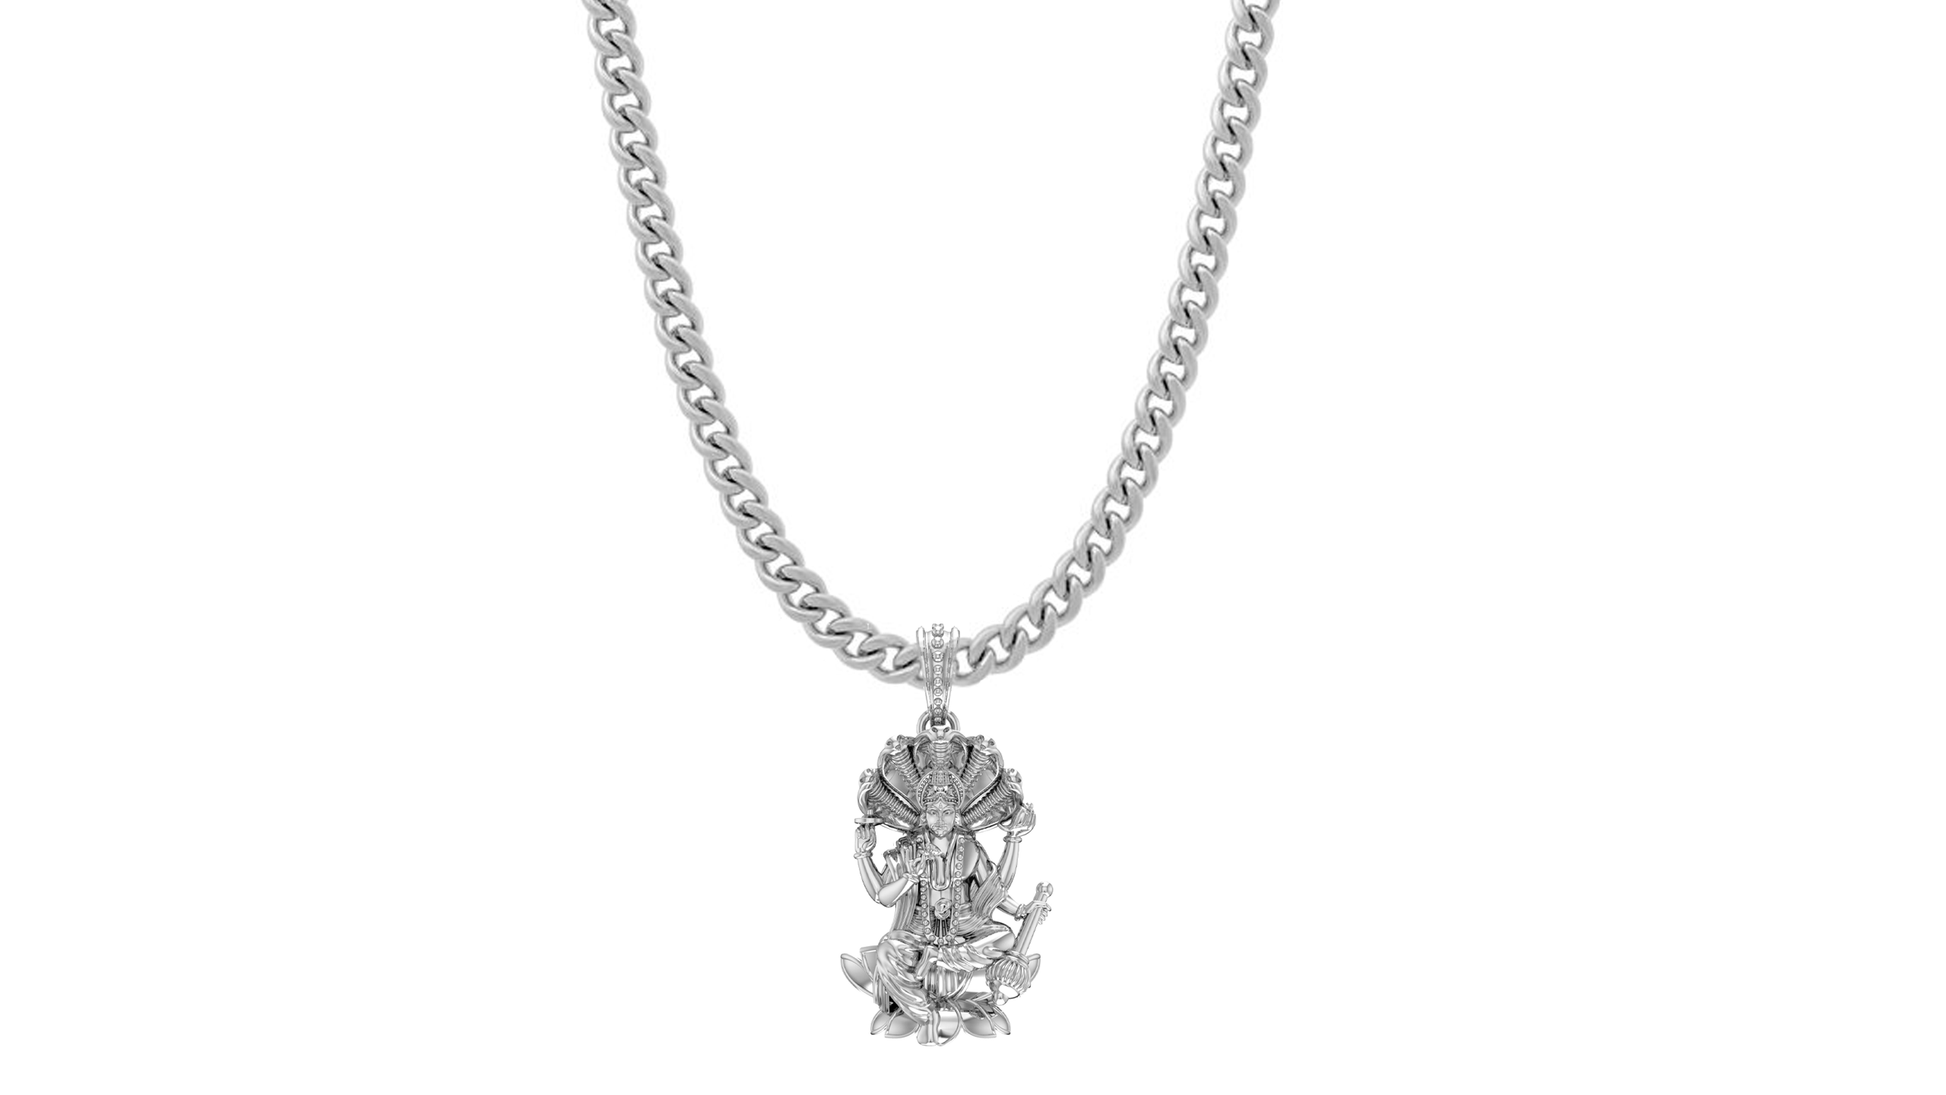 Akshat Sapphire Sterling Silver (92.5% purity) Vishnu ji chain pendant (Pendant with Curb Chain-22 inches) for Men and women, God vishnu chain Locket for Good Luck, Health & Wealth Akshat Sapphire